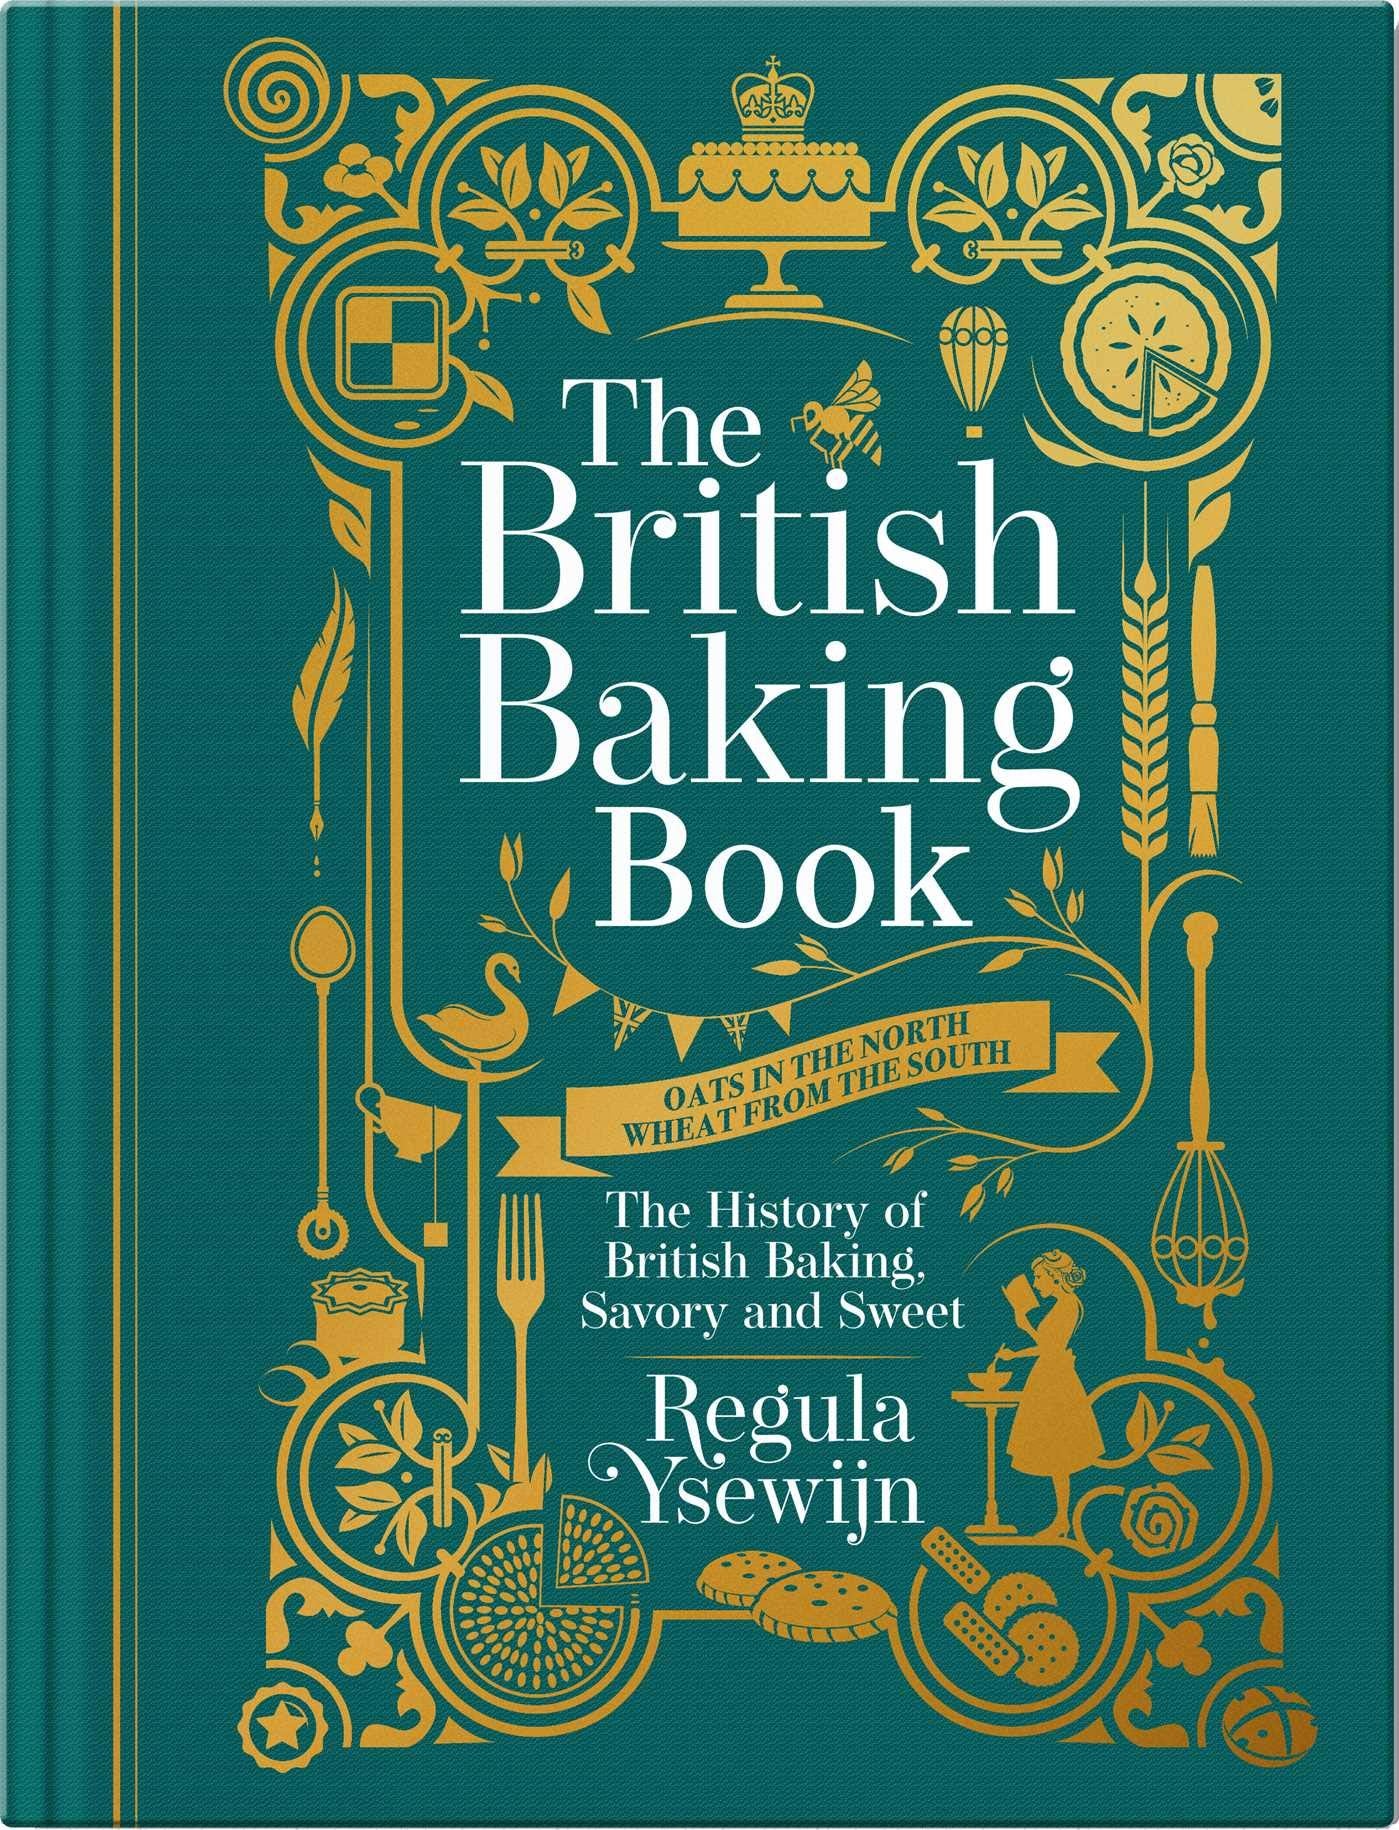 The British Baking Book: The History of British Baking, Savory and Sweet (Regula Ysewijn) *Signed*